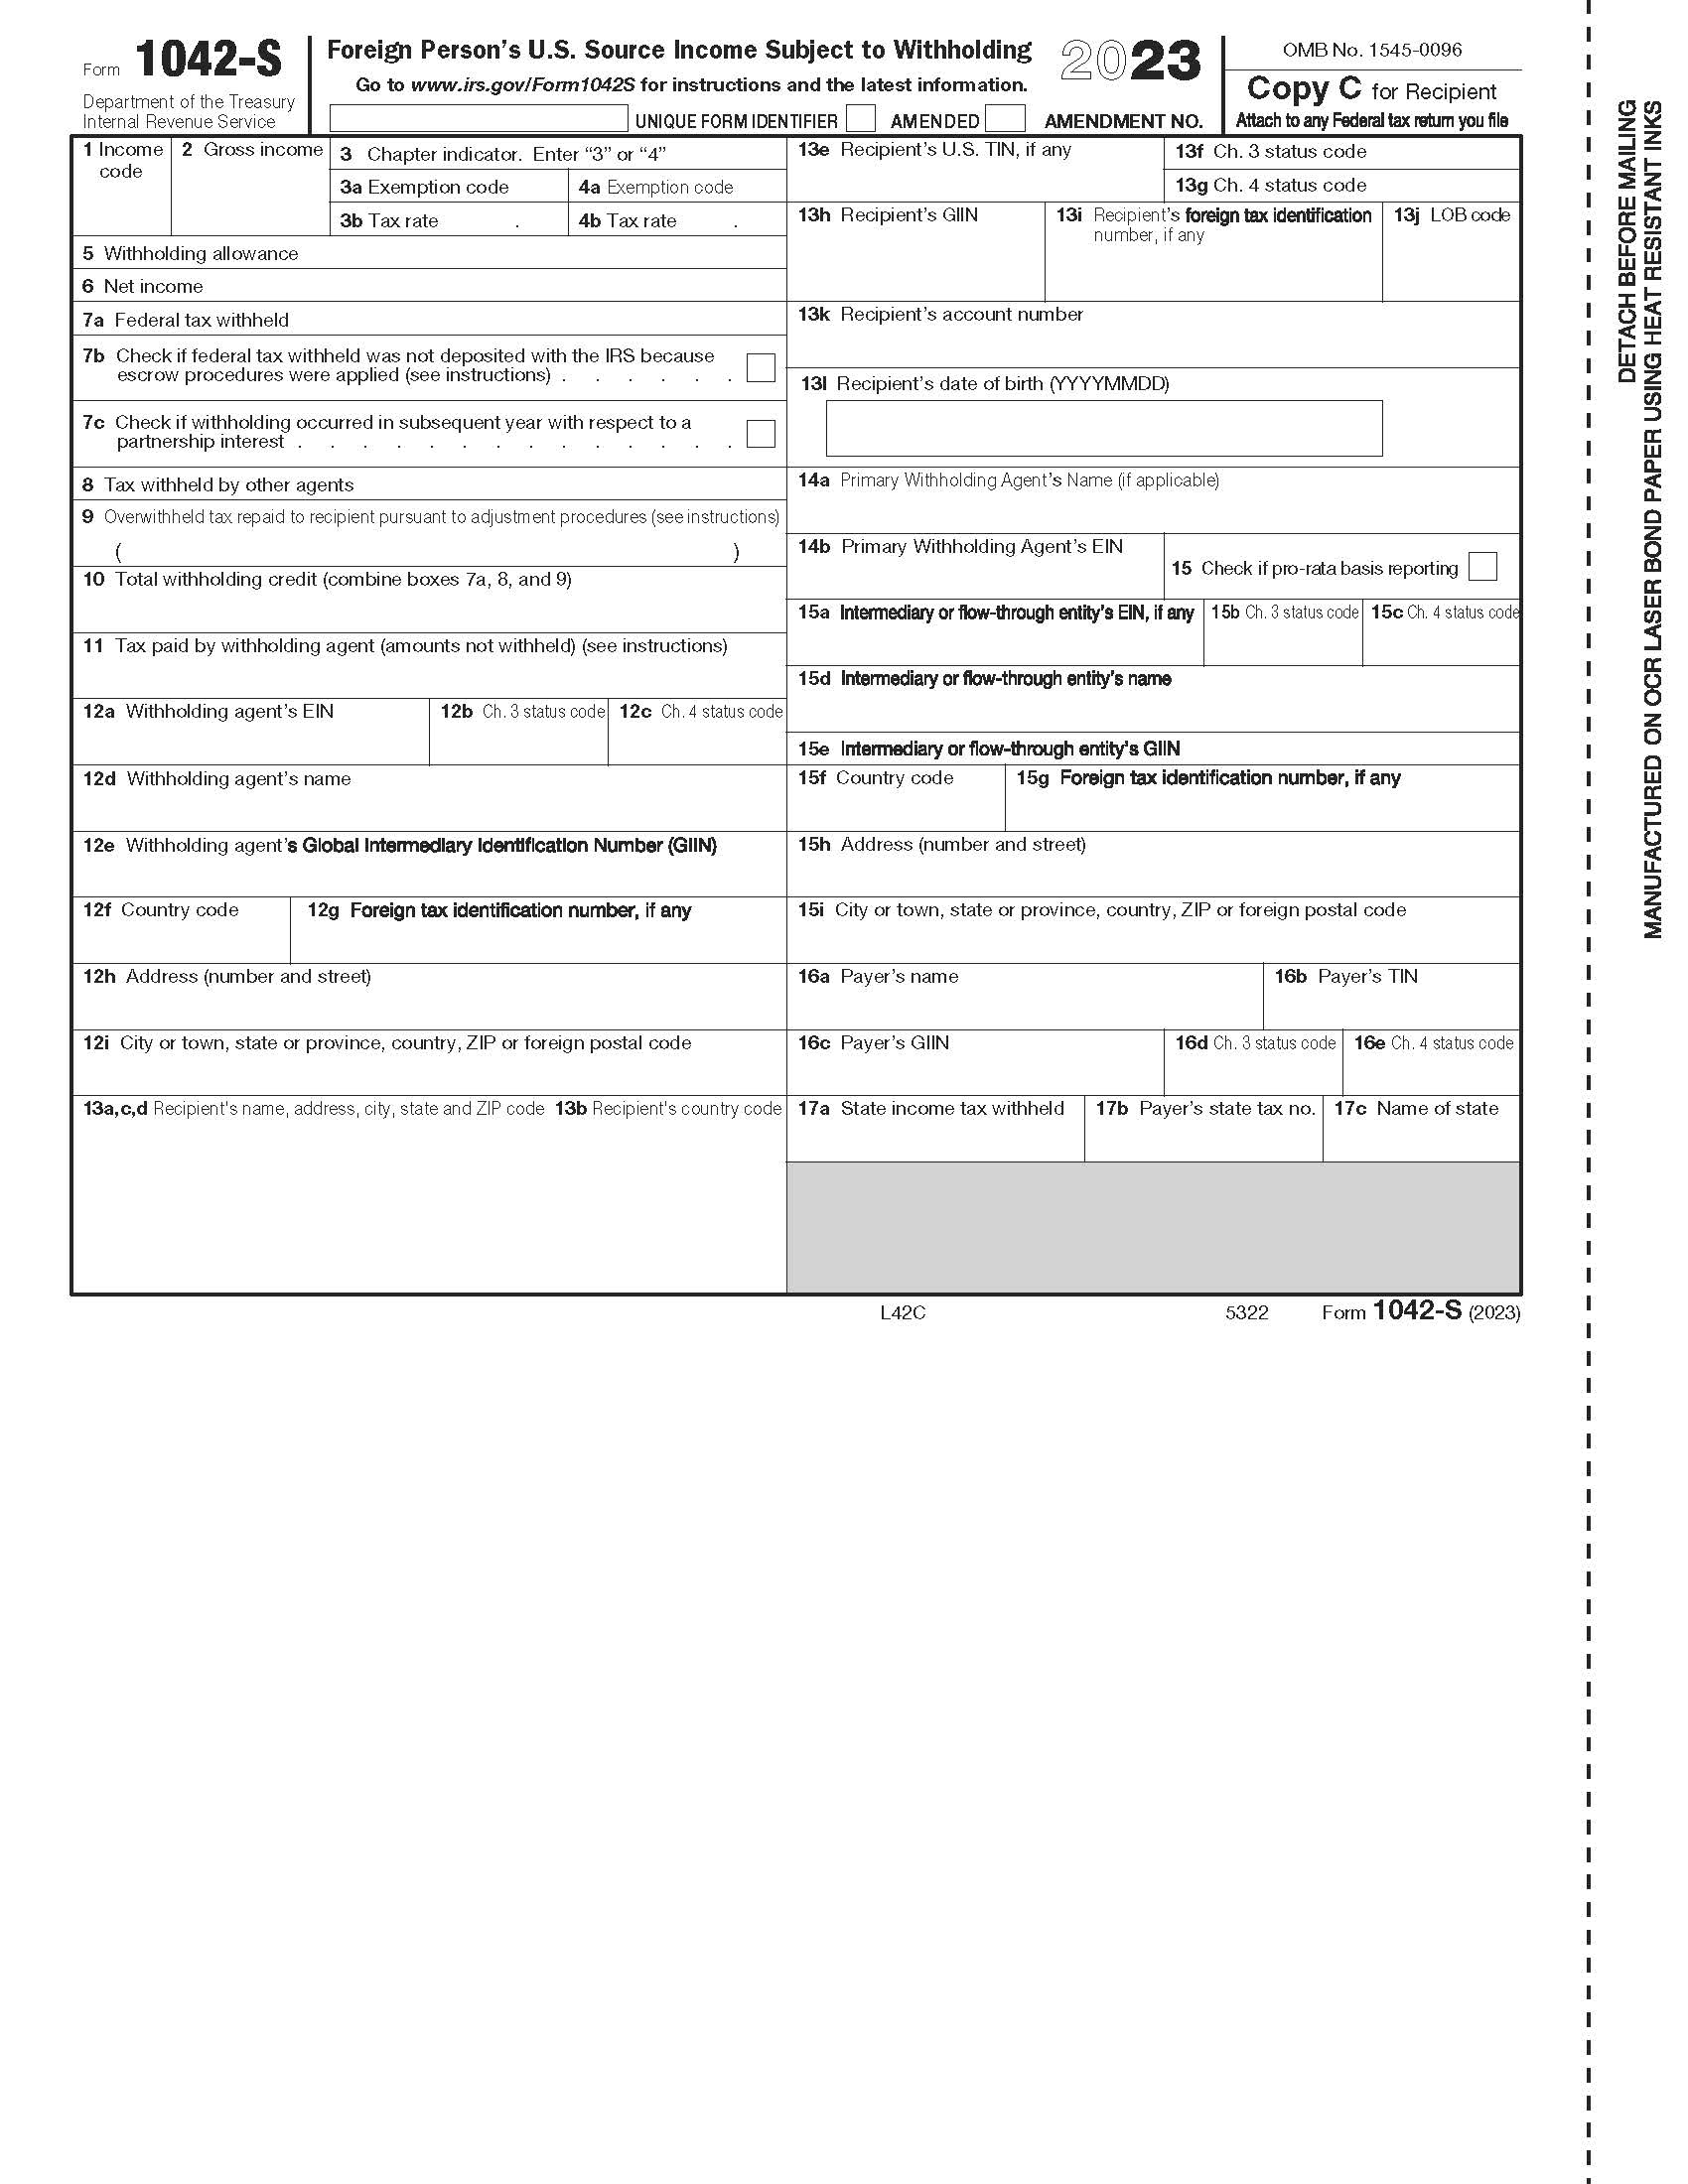 Tax Forms - 1042-S - Copy C